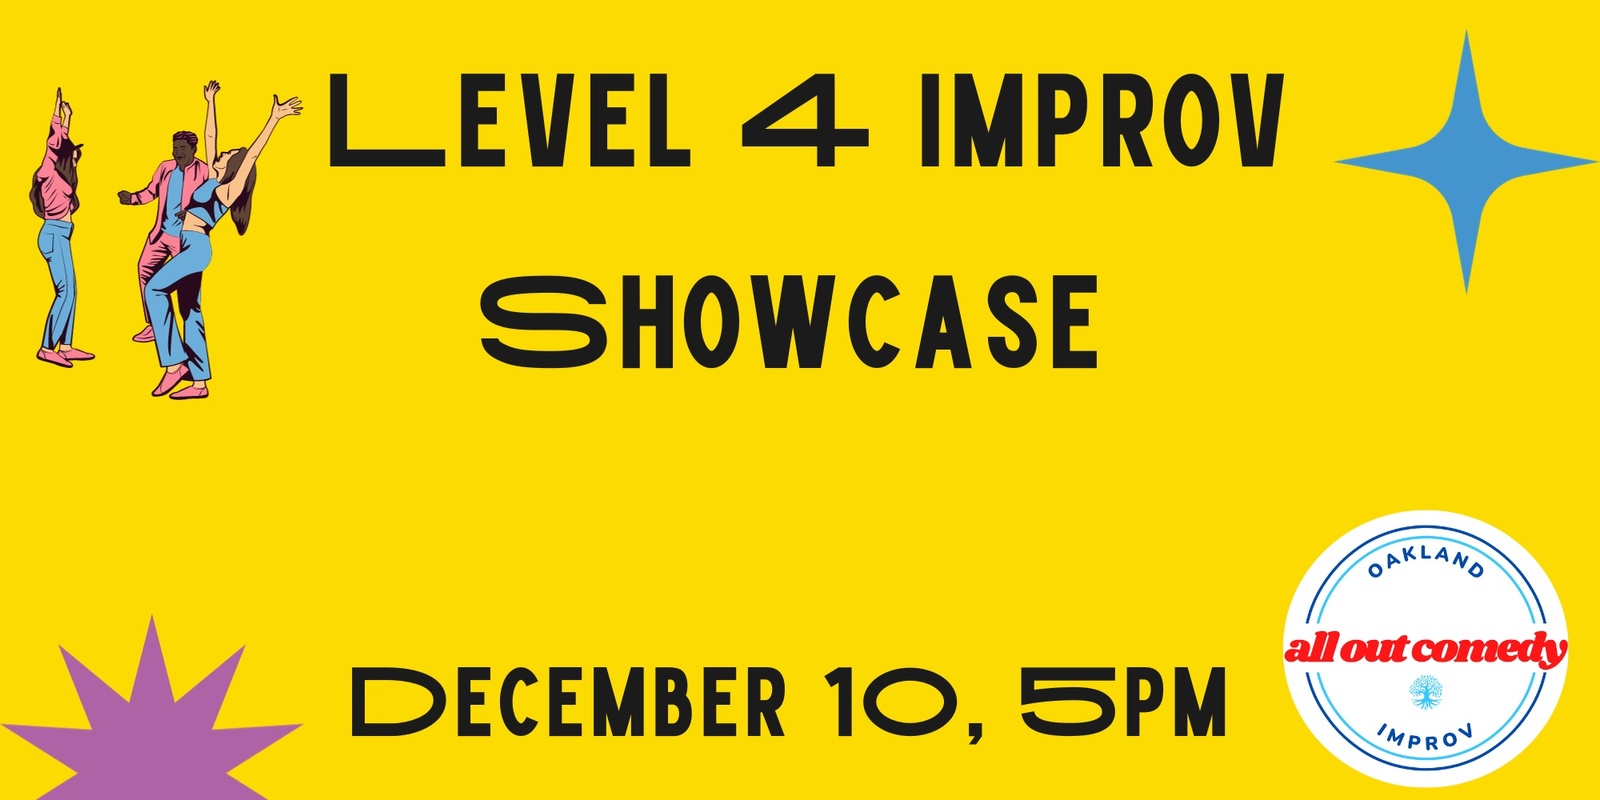 Banner image for Level 4 Improv Showcase